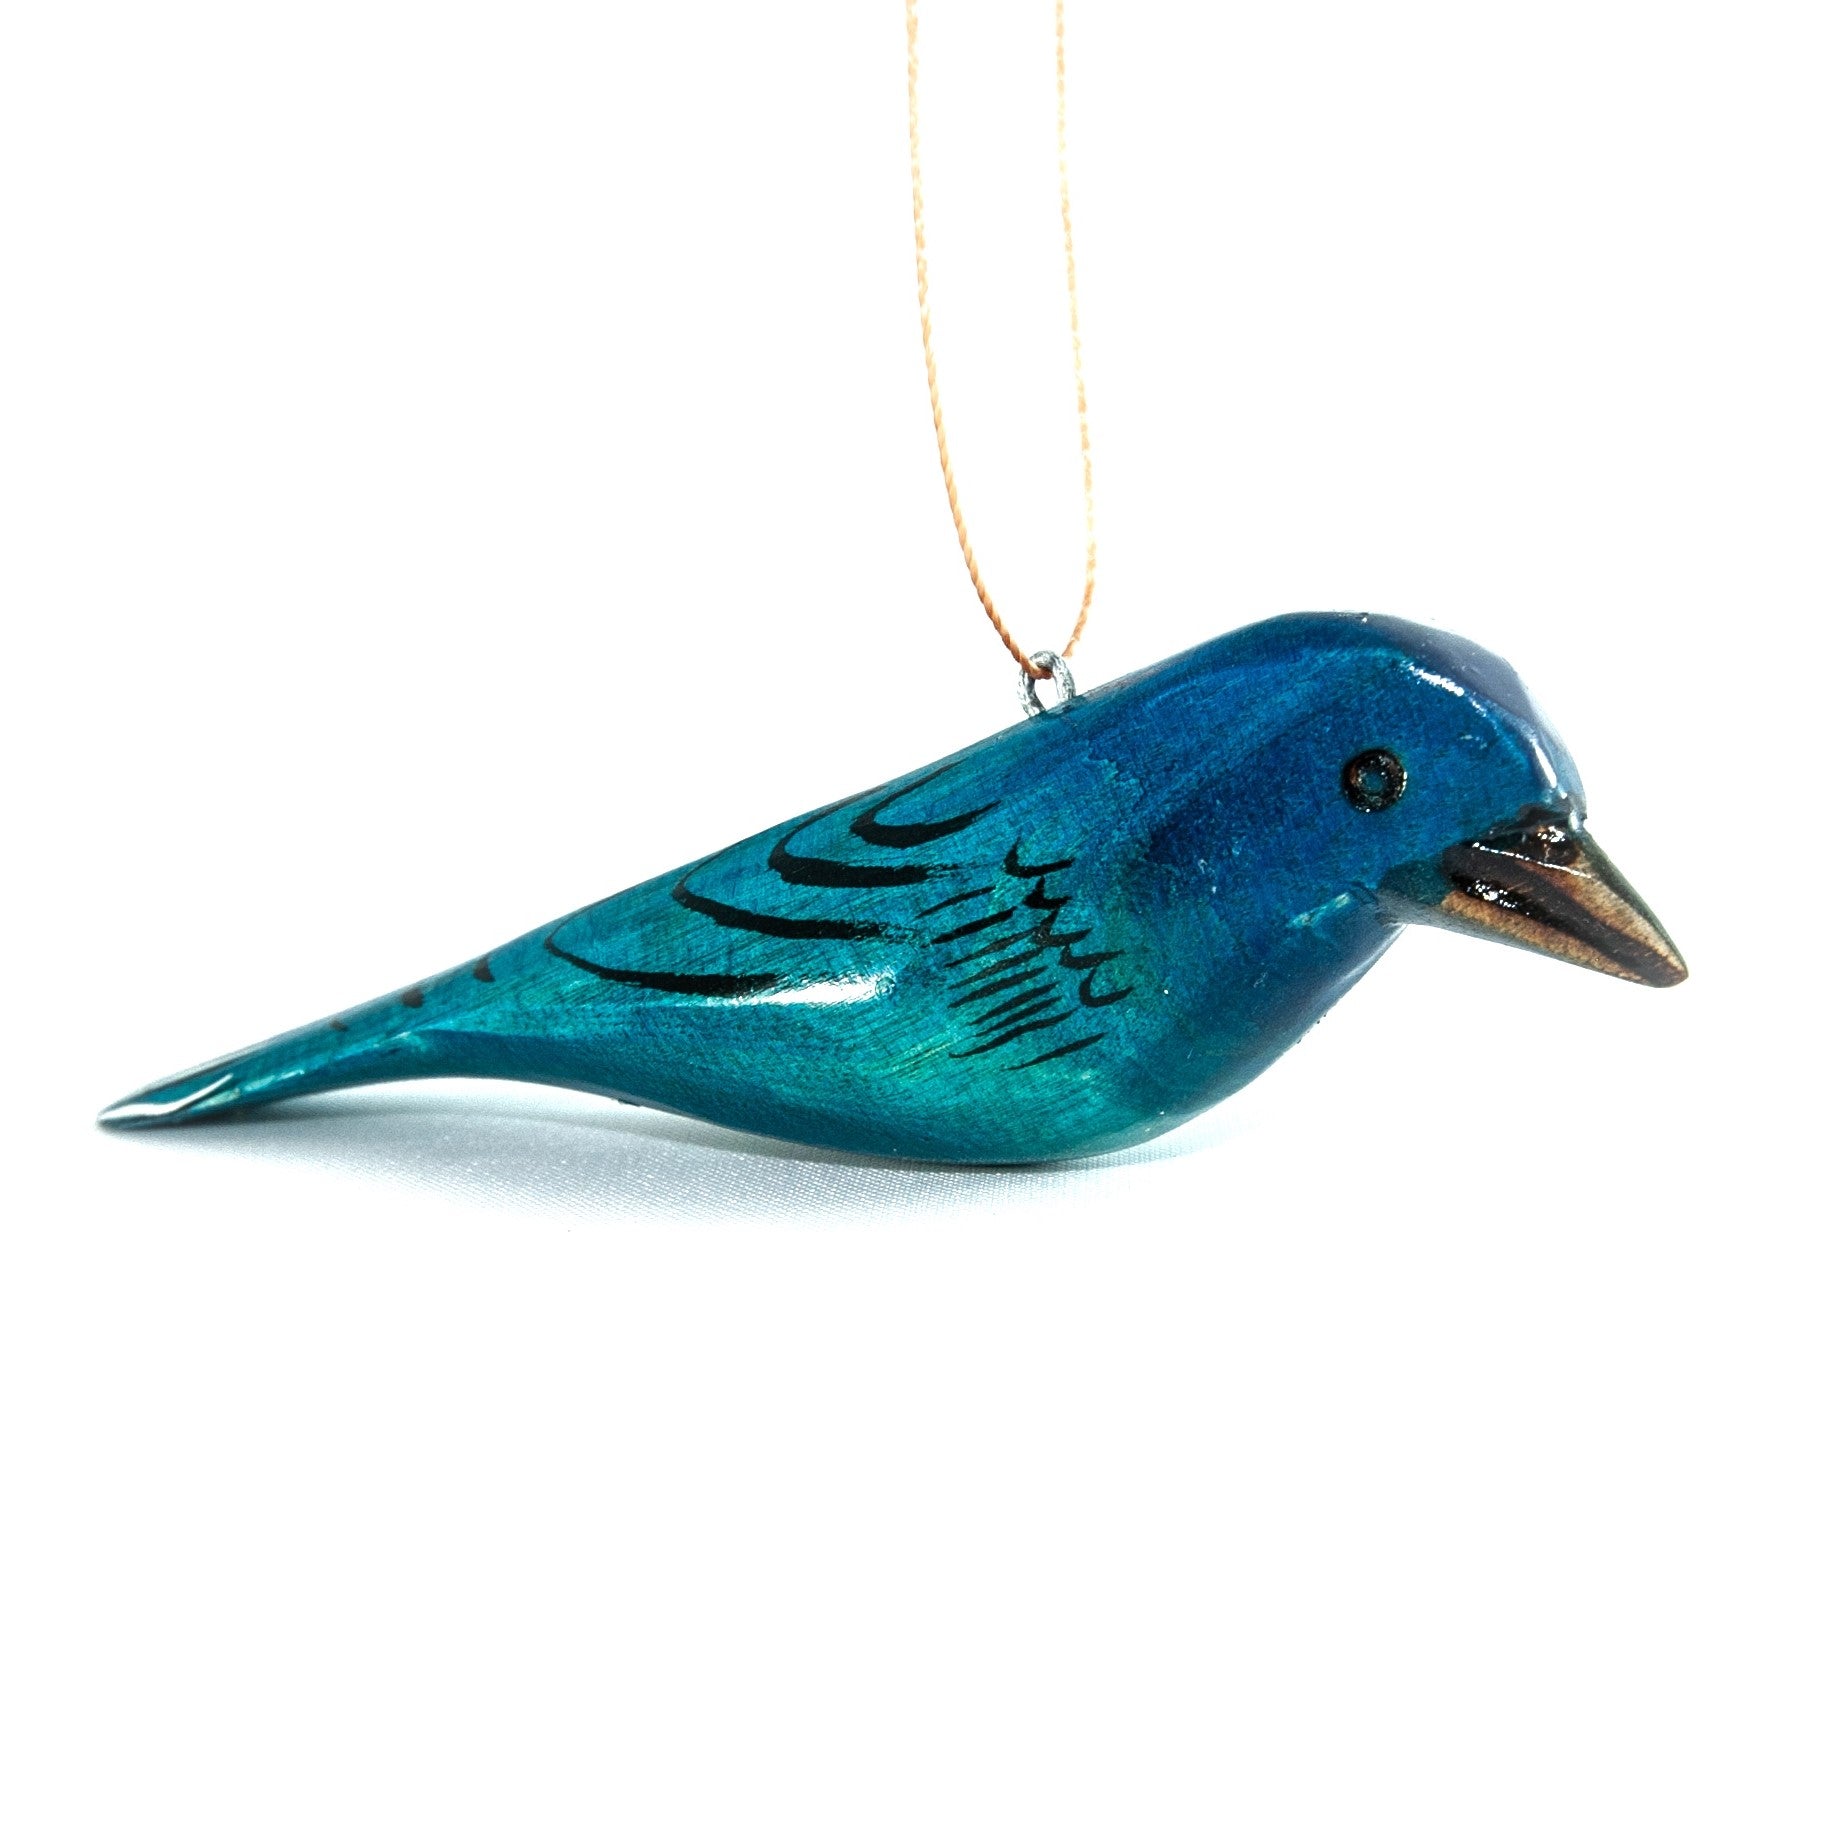 Indigo Bunting Wood Bird Ornament | Ornaments 4 Orphans®